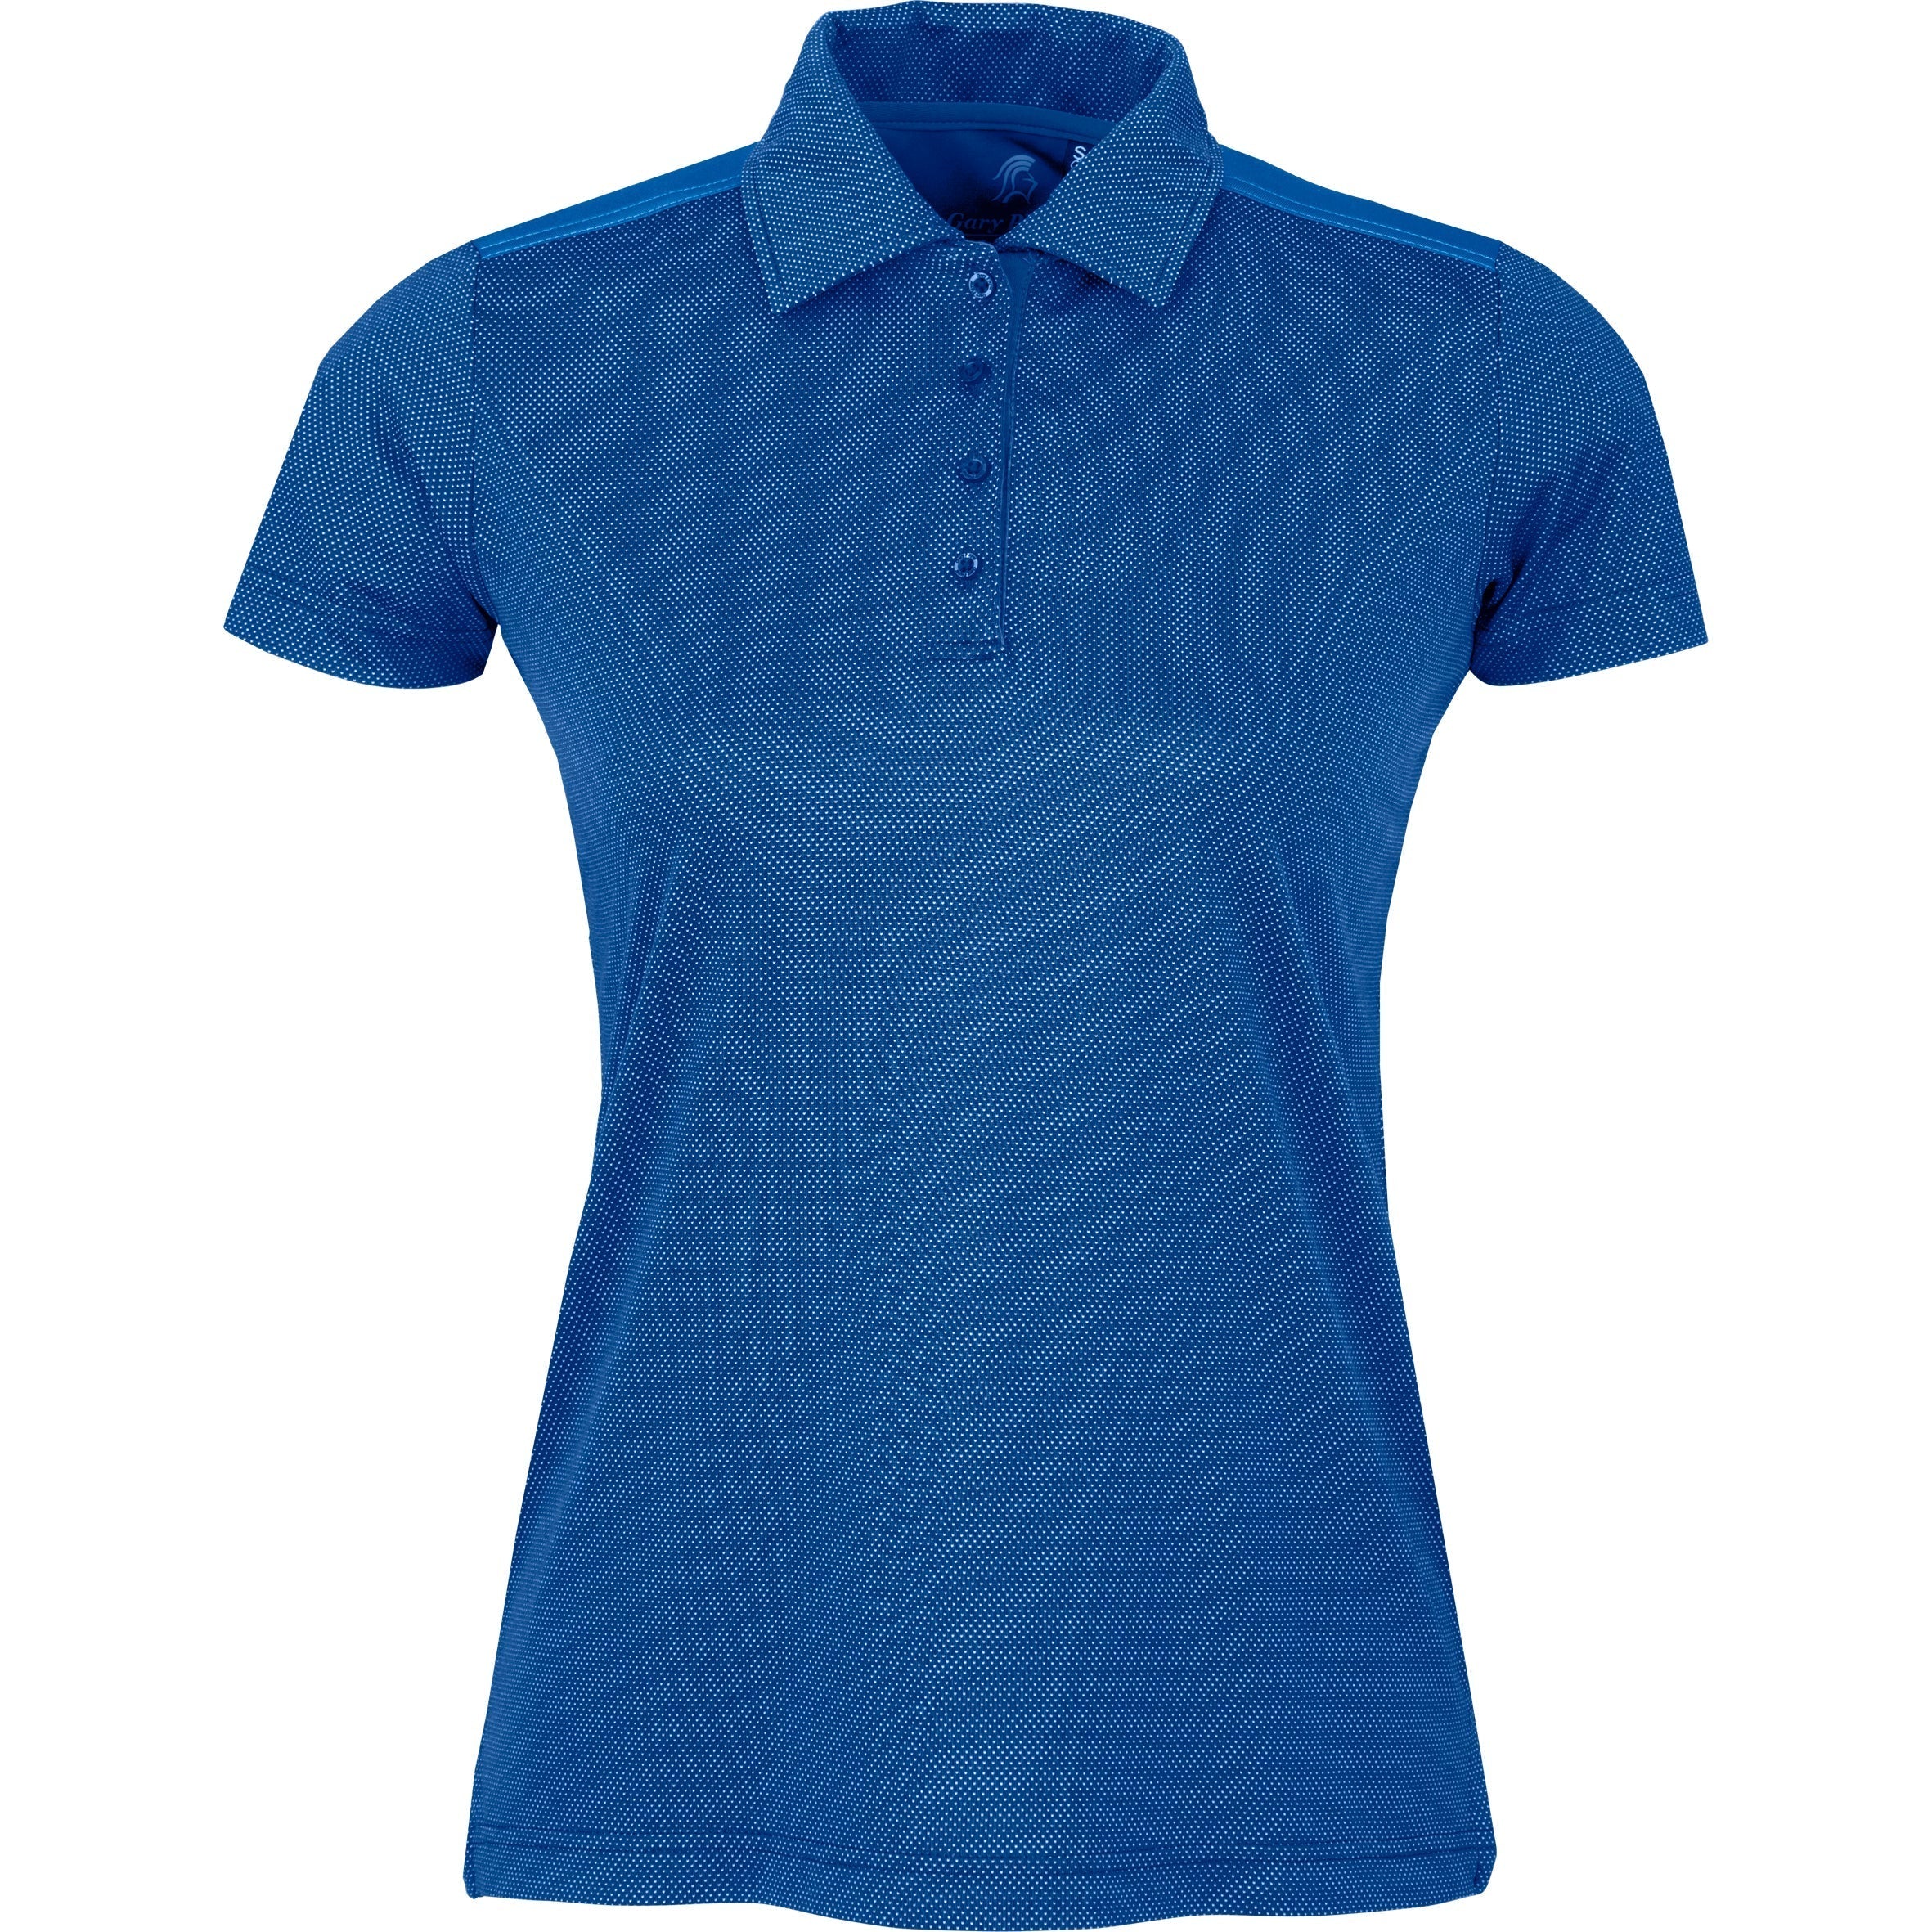 Ladies Sterling Ridge Golf Shirt - Navy Only-L-Royal Blue-RB